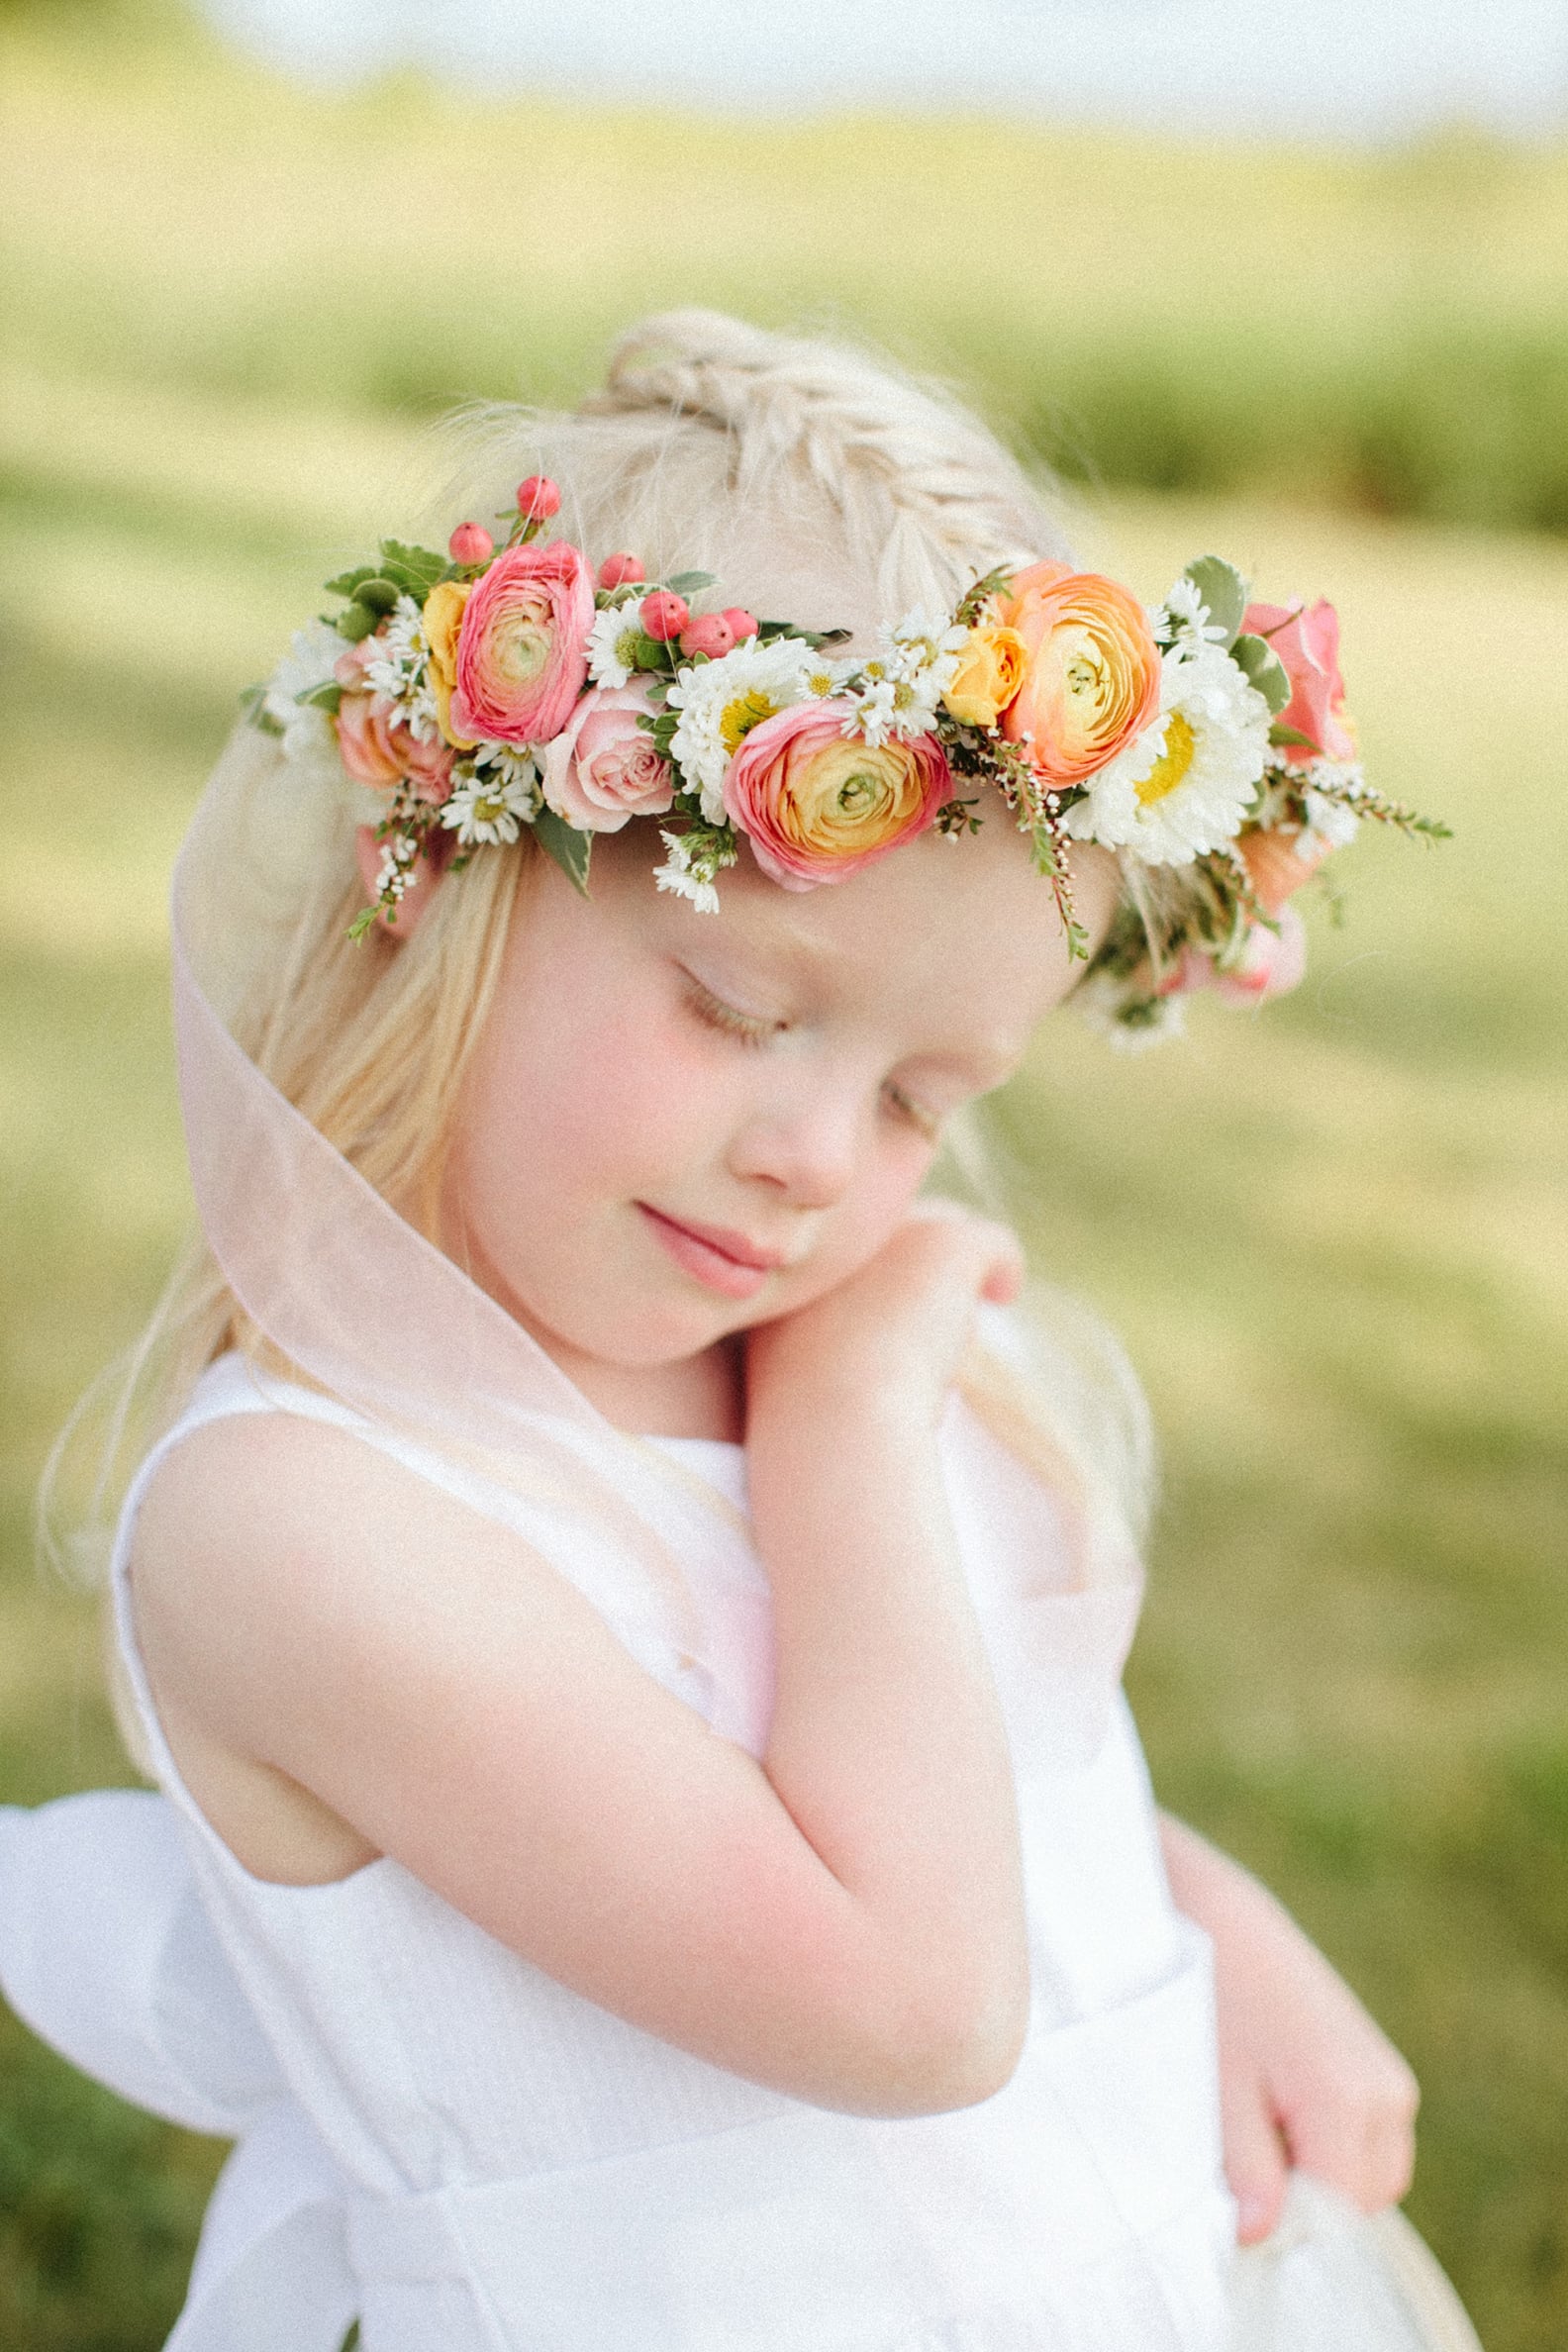 Wedding Flower Crown Ideas For Flower Girls | POPSUGAR Family